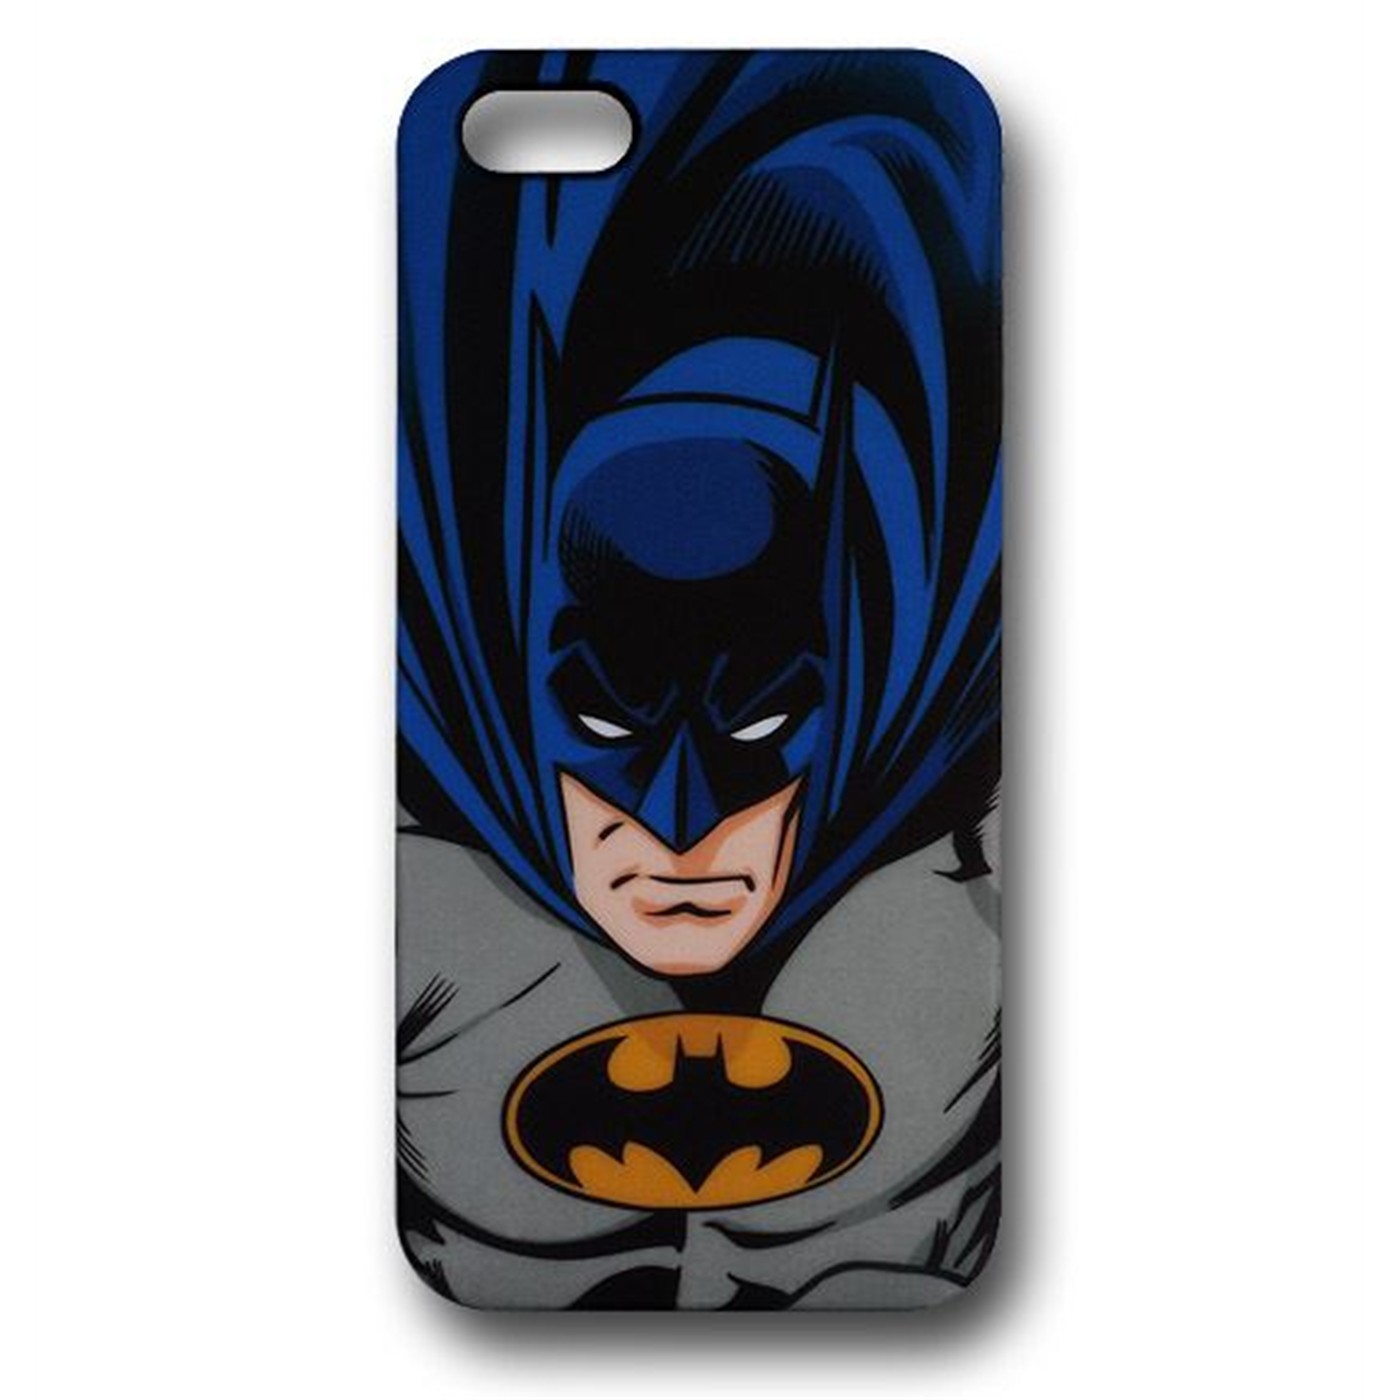 Batman Image iPhone 5 Hard Case